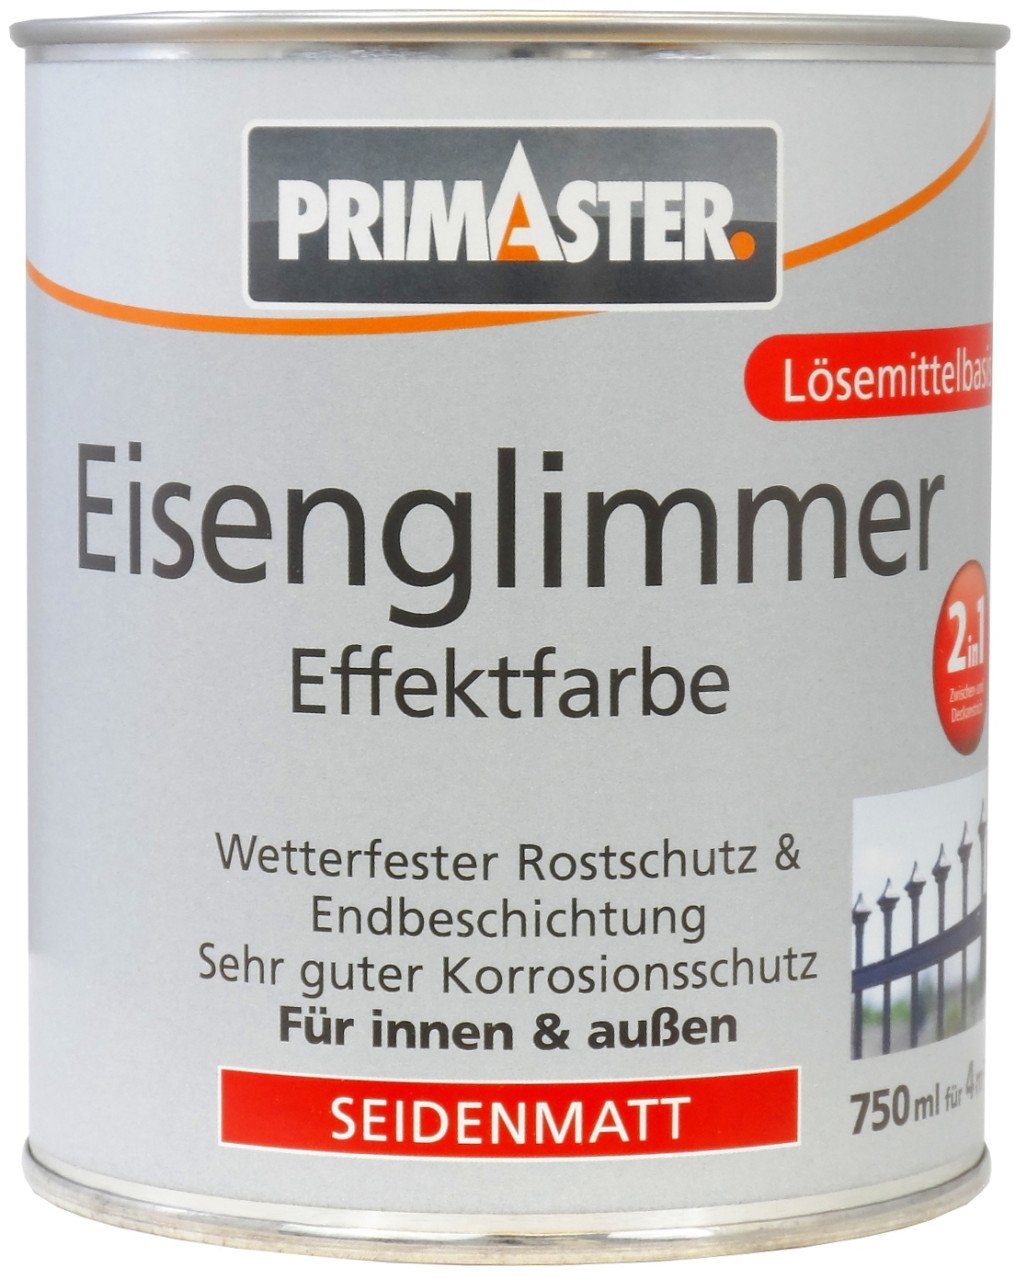 750 Effektfarbe Lack Primaster ml Primaster grün Eisenglimmer